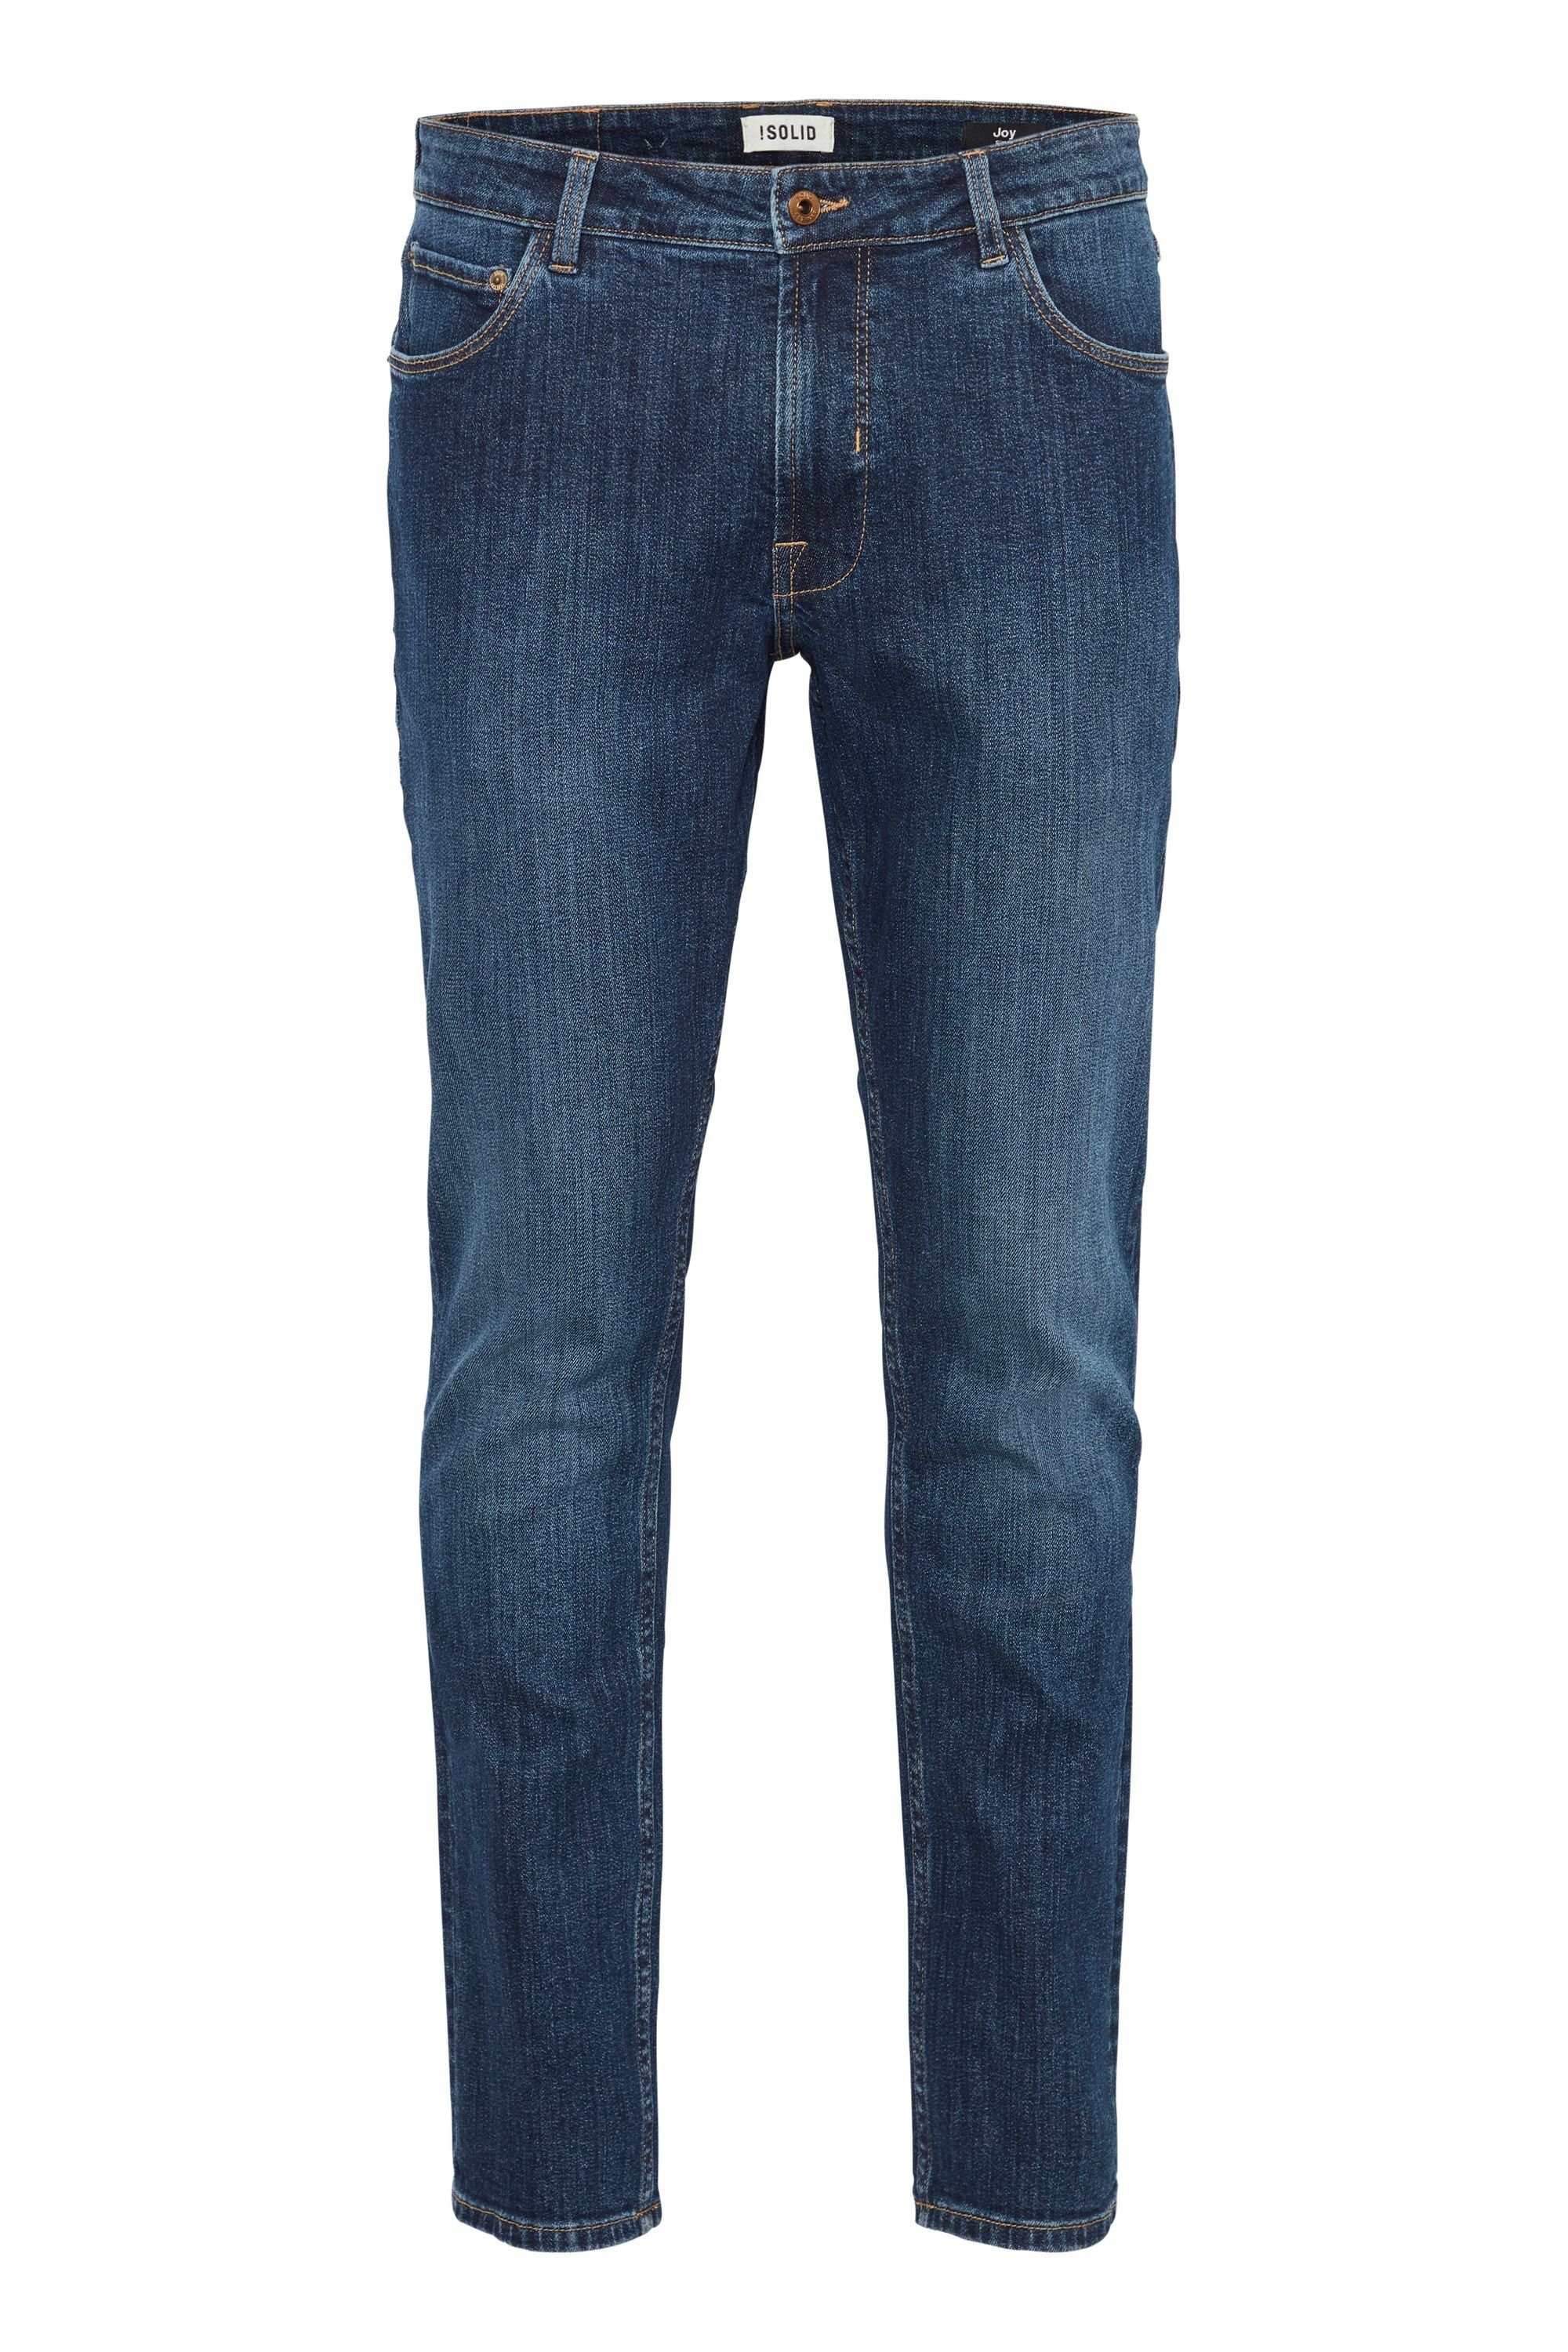 !Solid Slim-fit-Jeans SDDunley Joy - 21107404 Dark blue denim (700031)